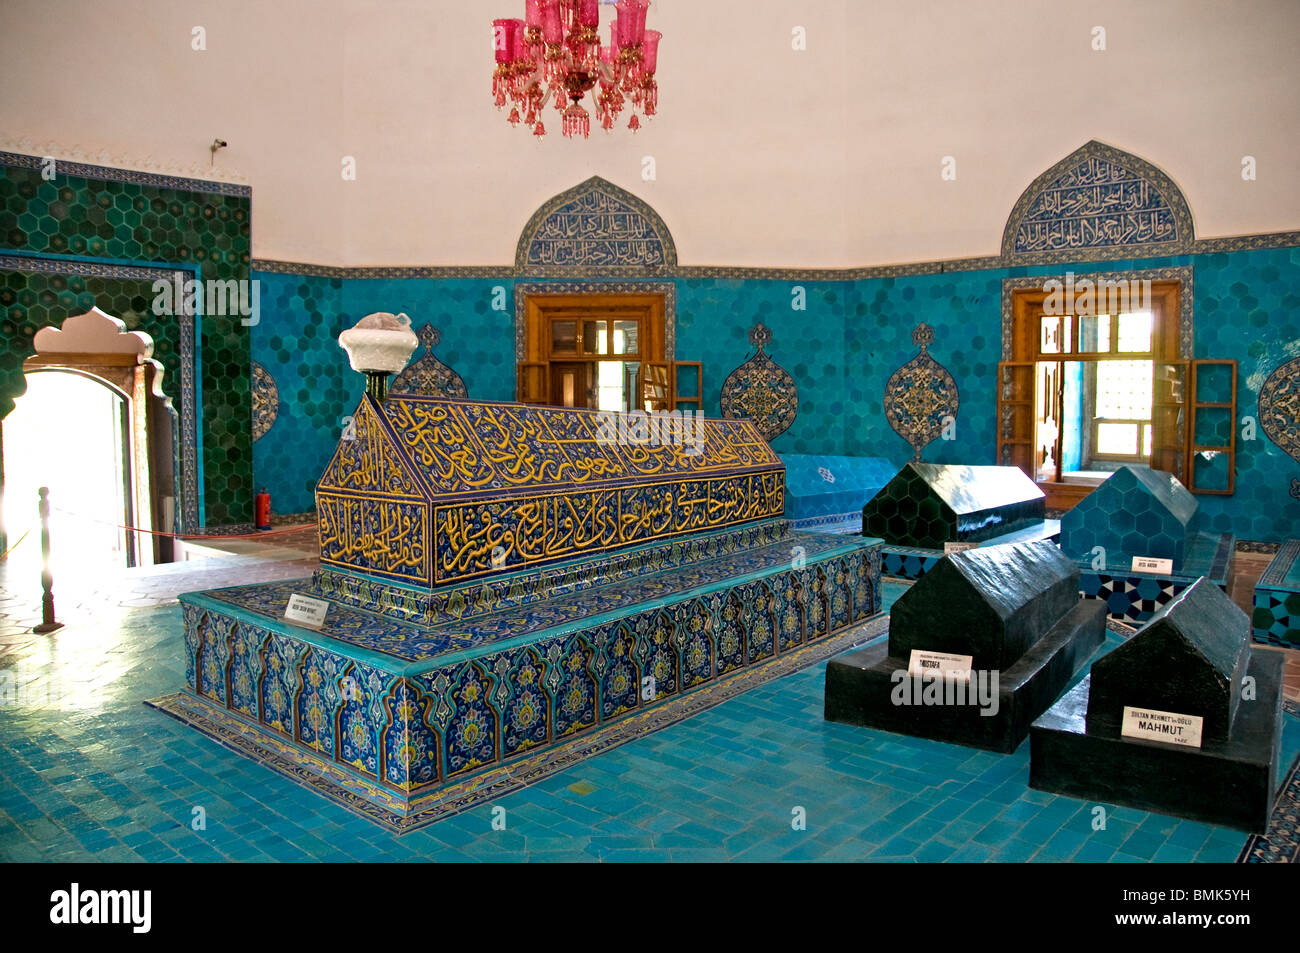 Yesil Cami grüne Moschee Bursa Türkei türkische Islam Stockfoto